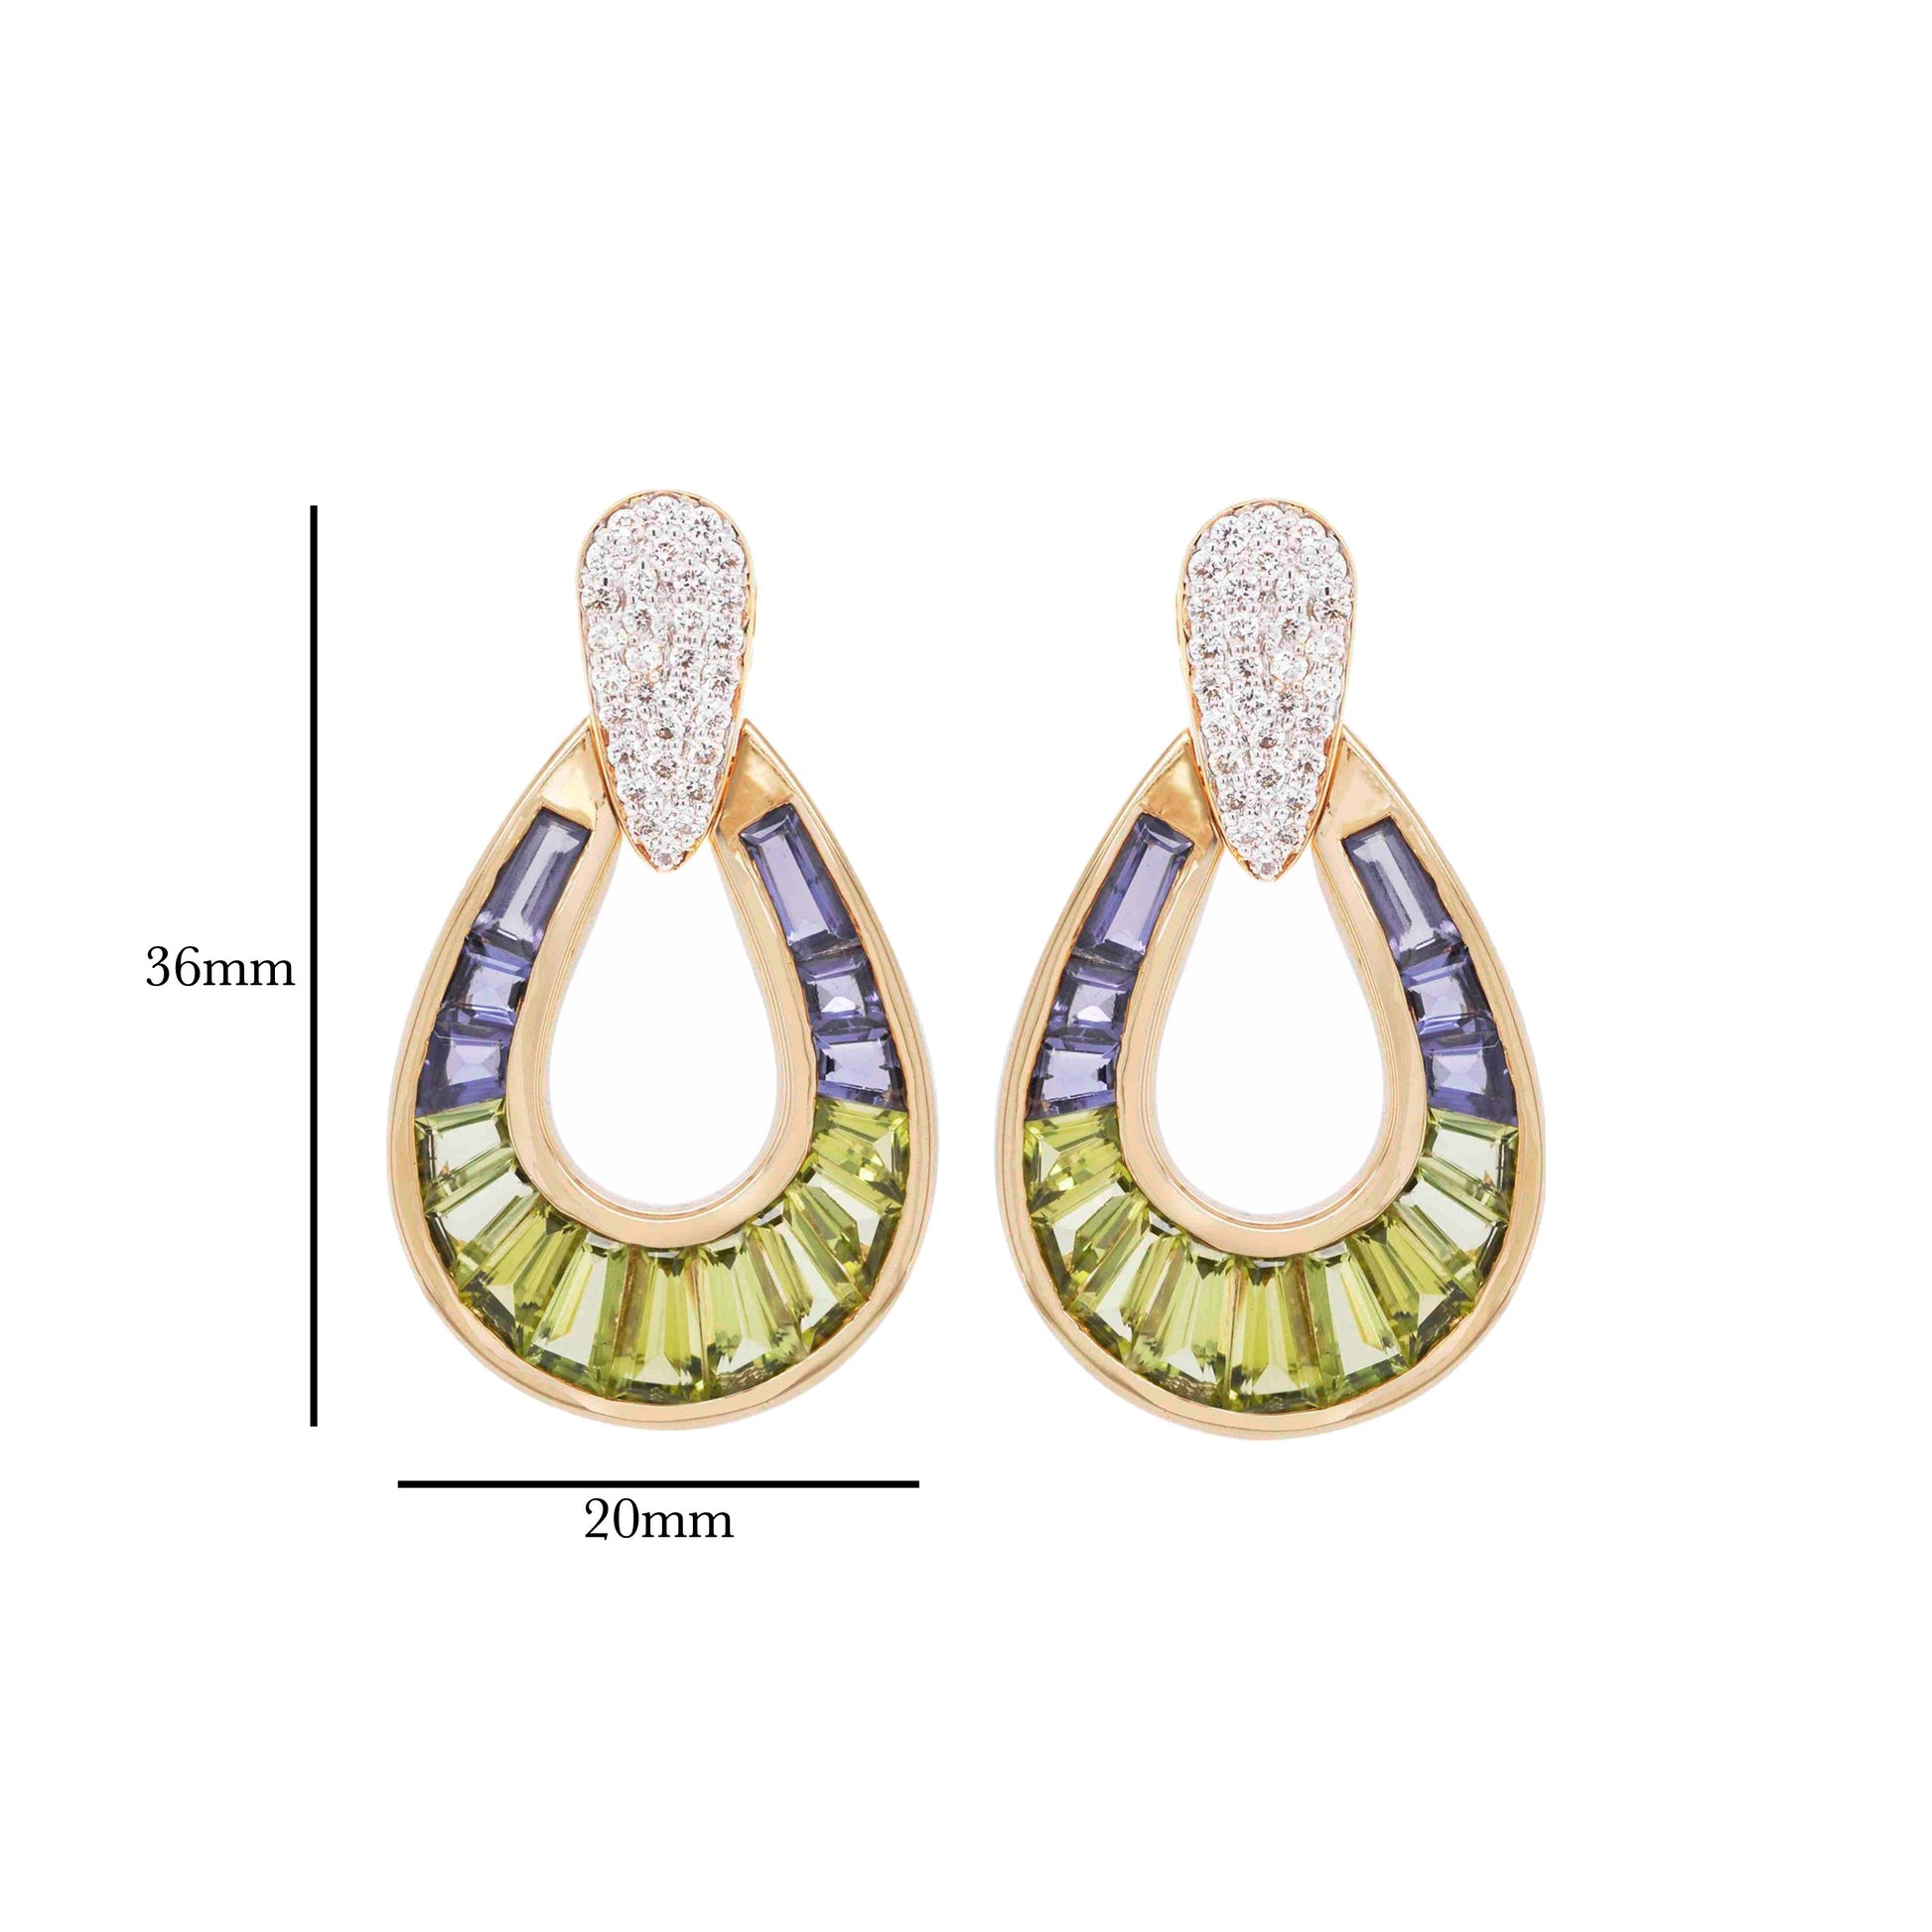 18K Gold Iolite Peridot Diamond Raindrop Earrings - Vaibhav Dhadda Jewelry